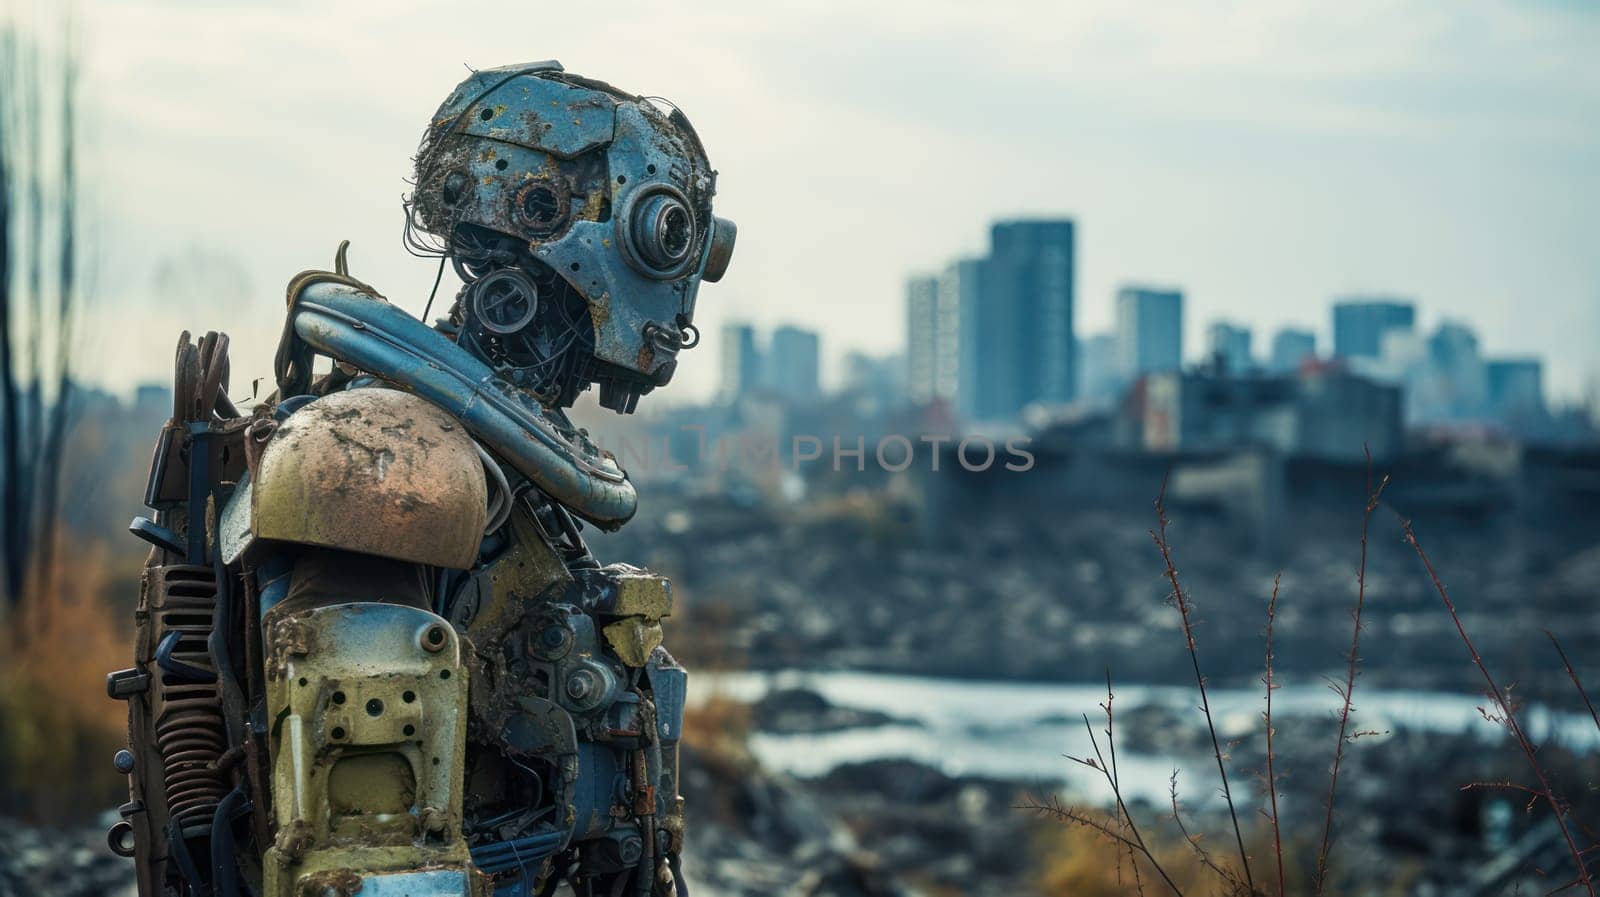 Robot Destruction City Dump by Alla_Yurtayeva